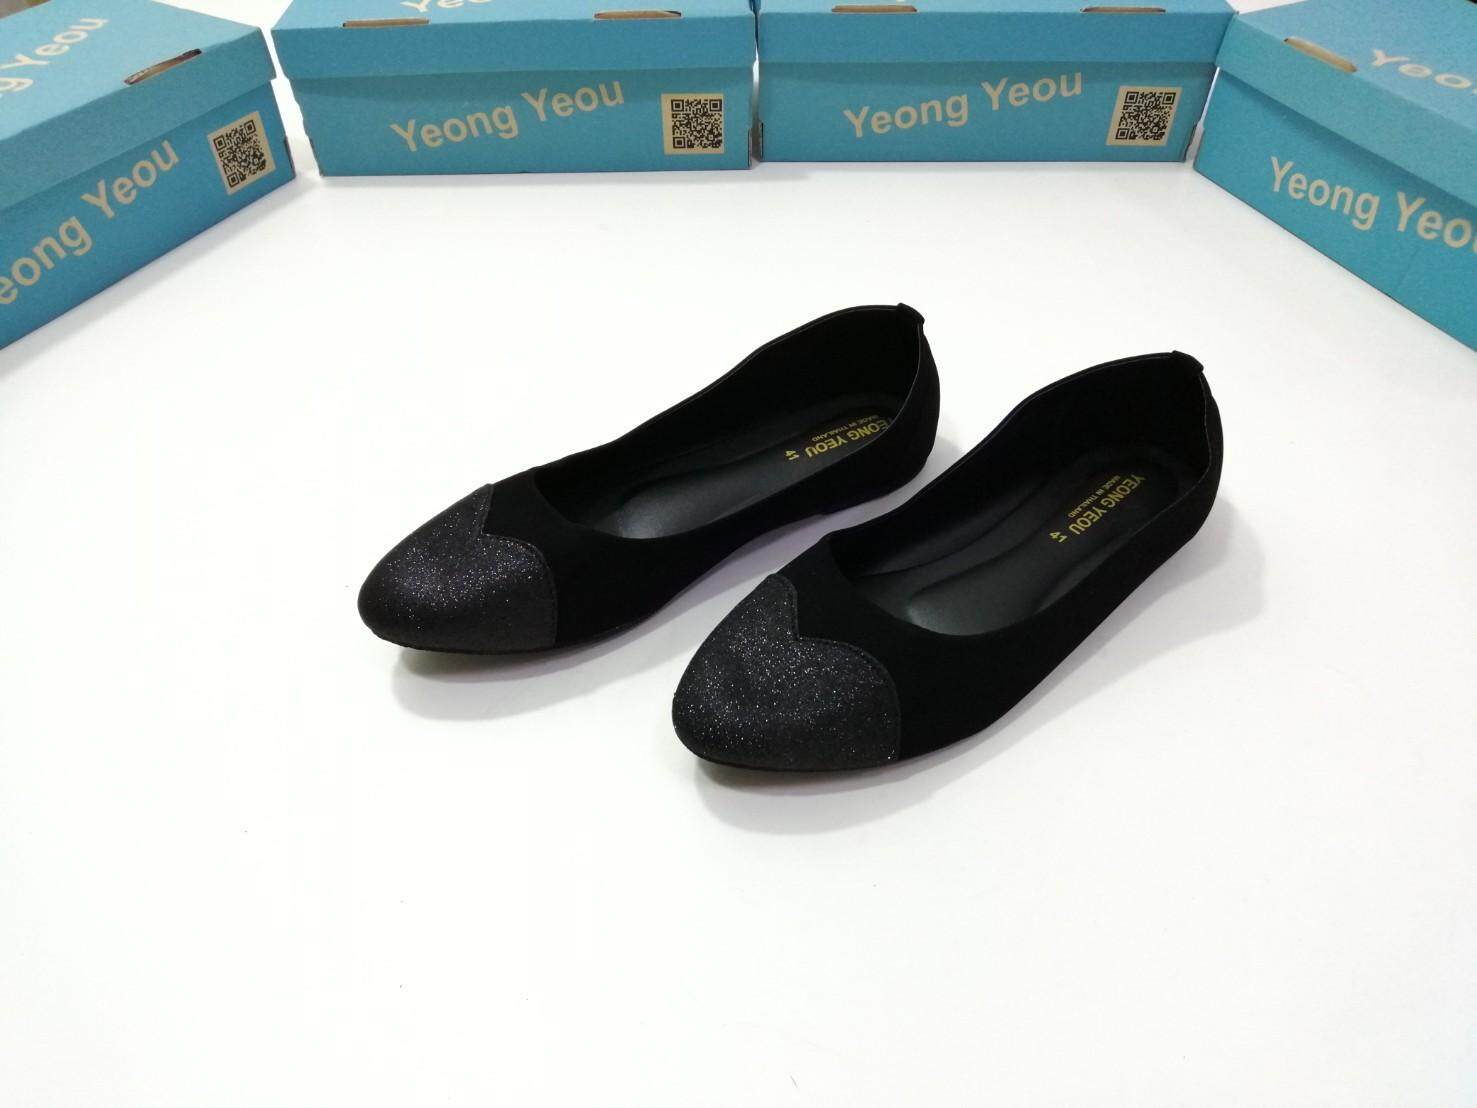 yeong yeou รองเท้าคัทชูหัวแหลมส้นแบนผ้านูบัคบิ๊กไซส์ รหัสyy708-1